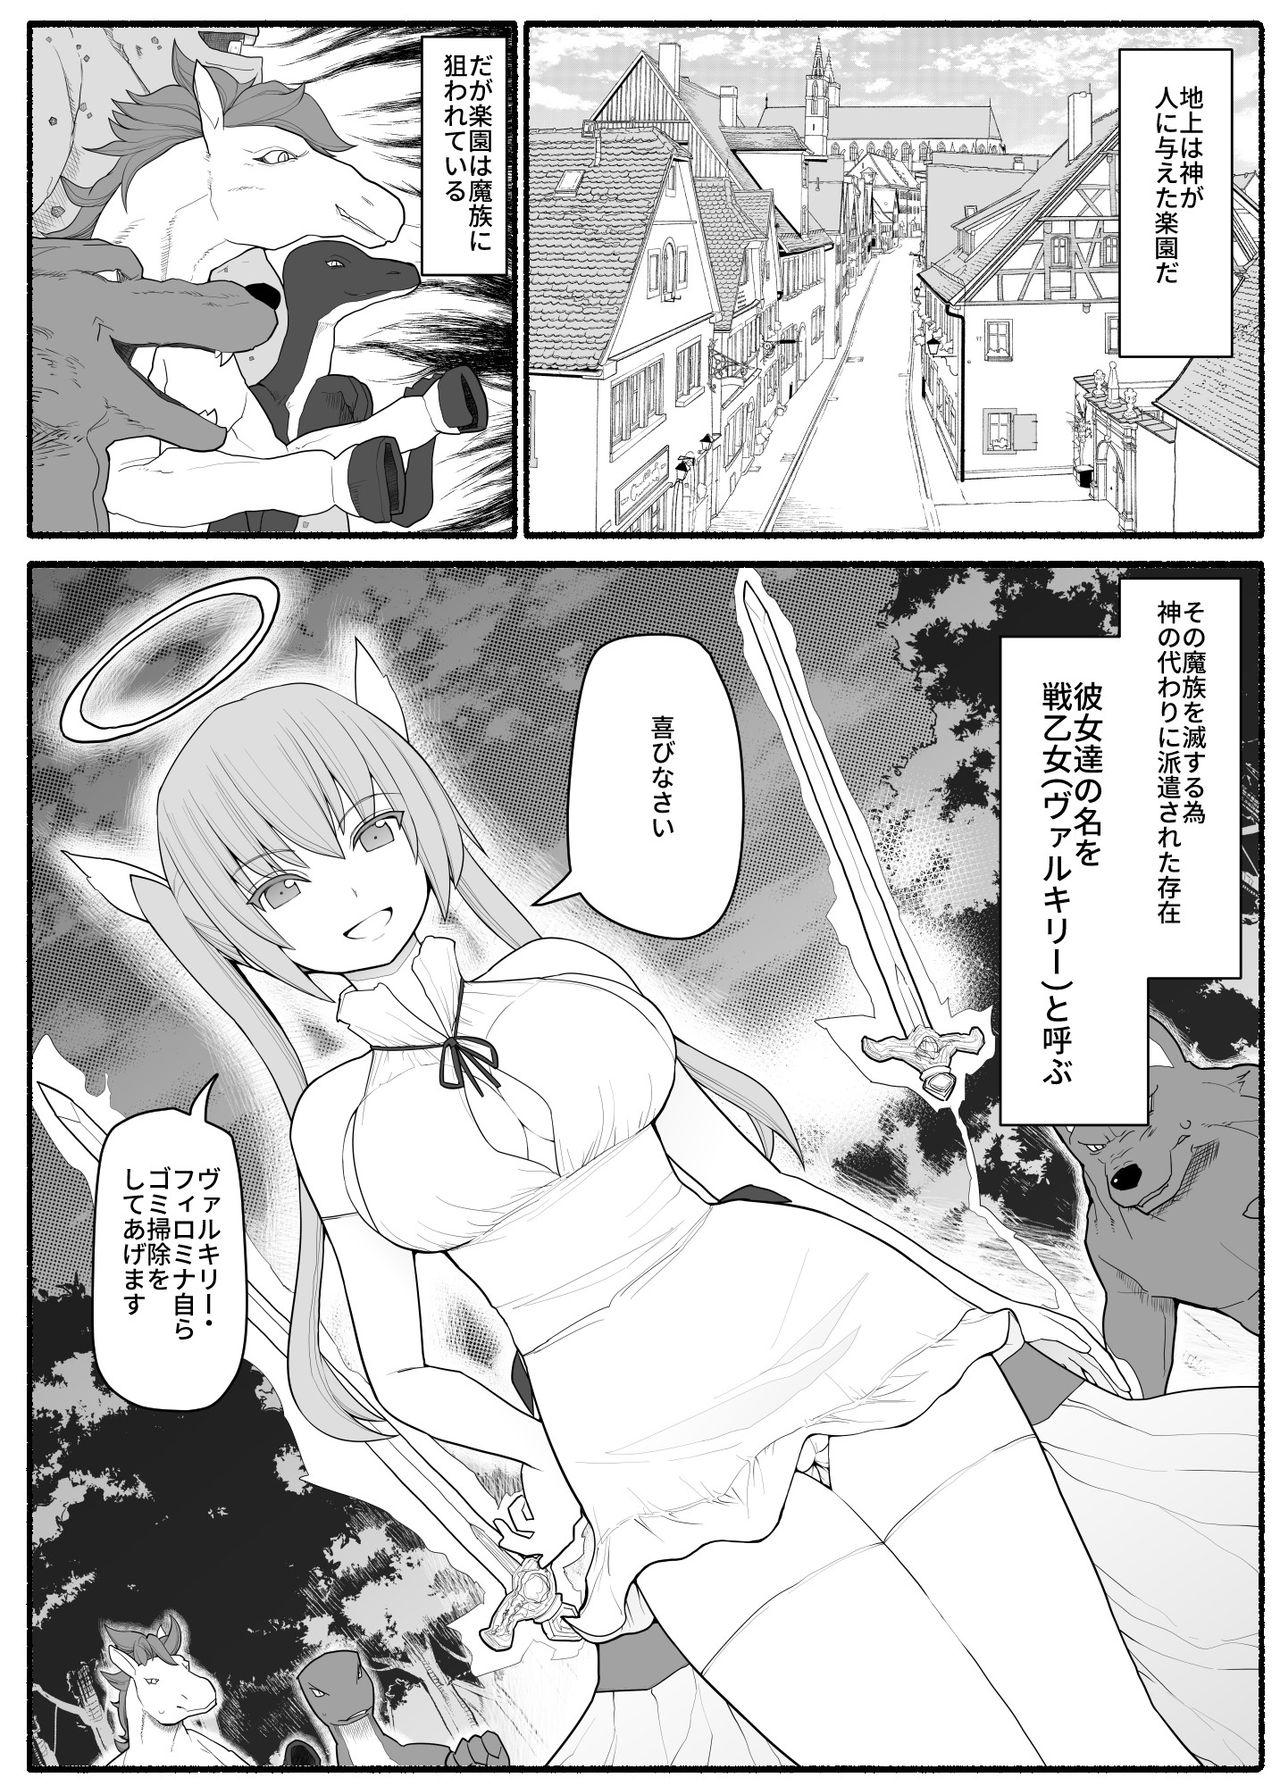 Trans Ikusa Otome Bad End - Original Petite - Page 2